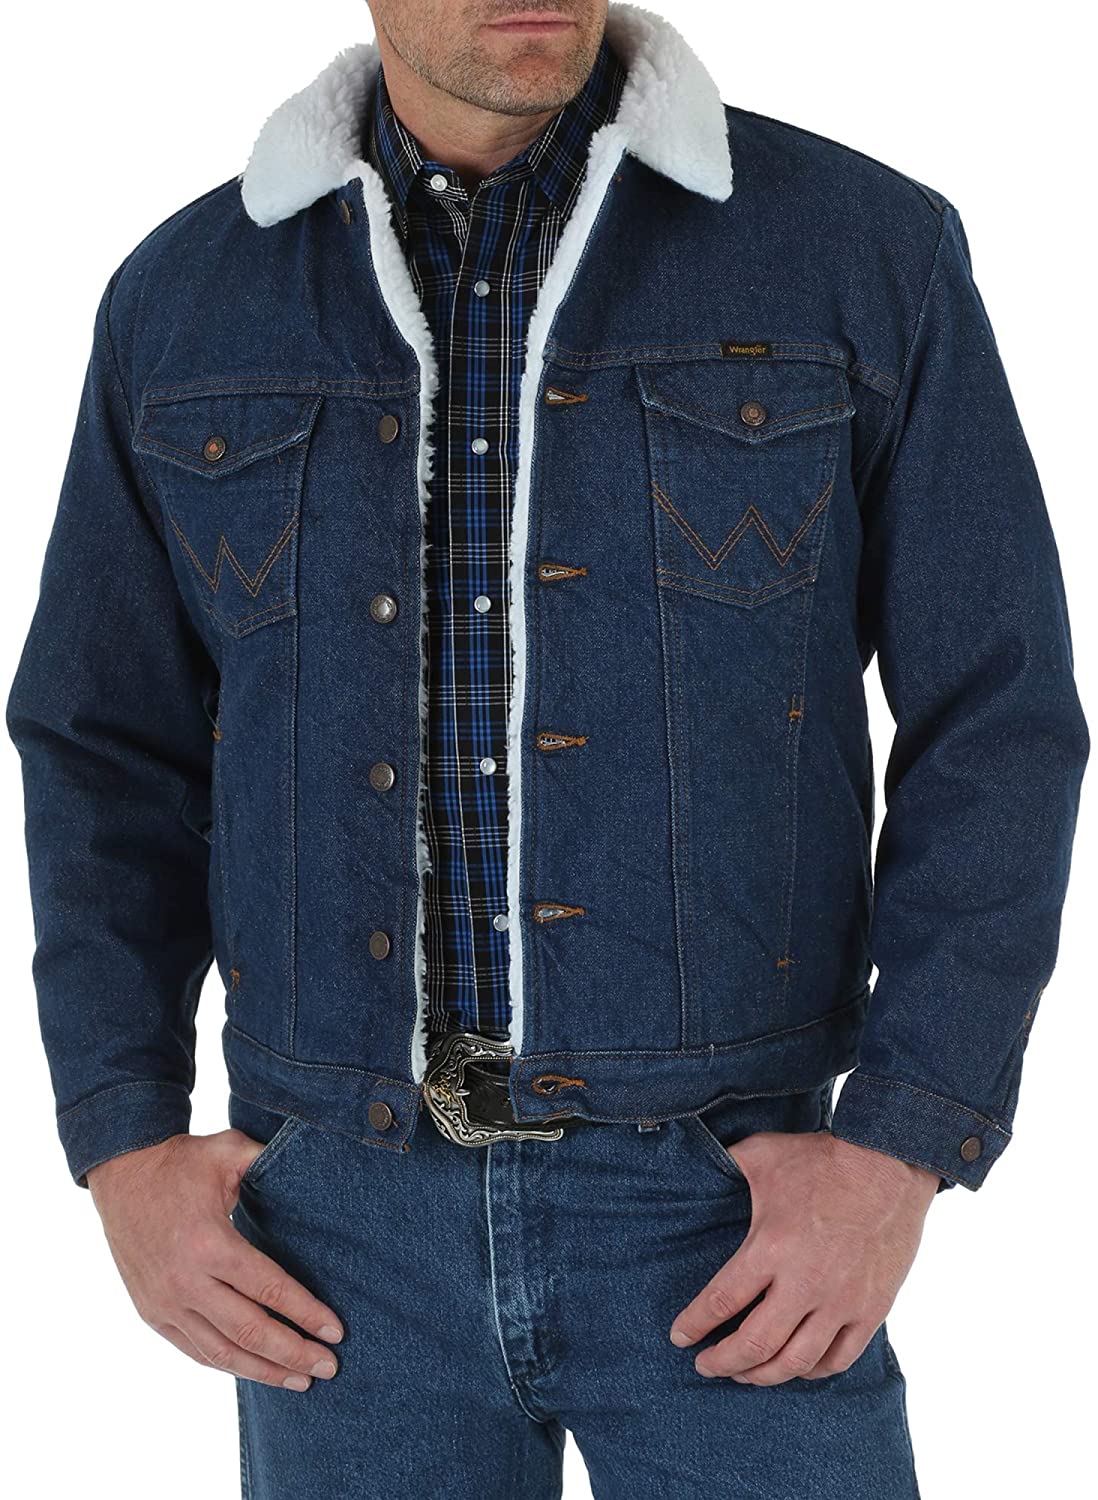 Wrangler Men's Western Style Lined Denim Jacket | eBay